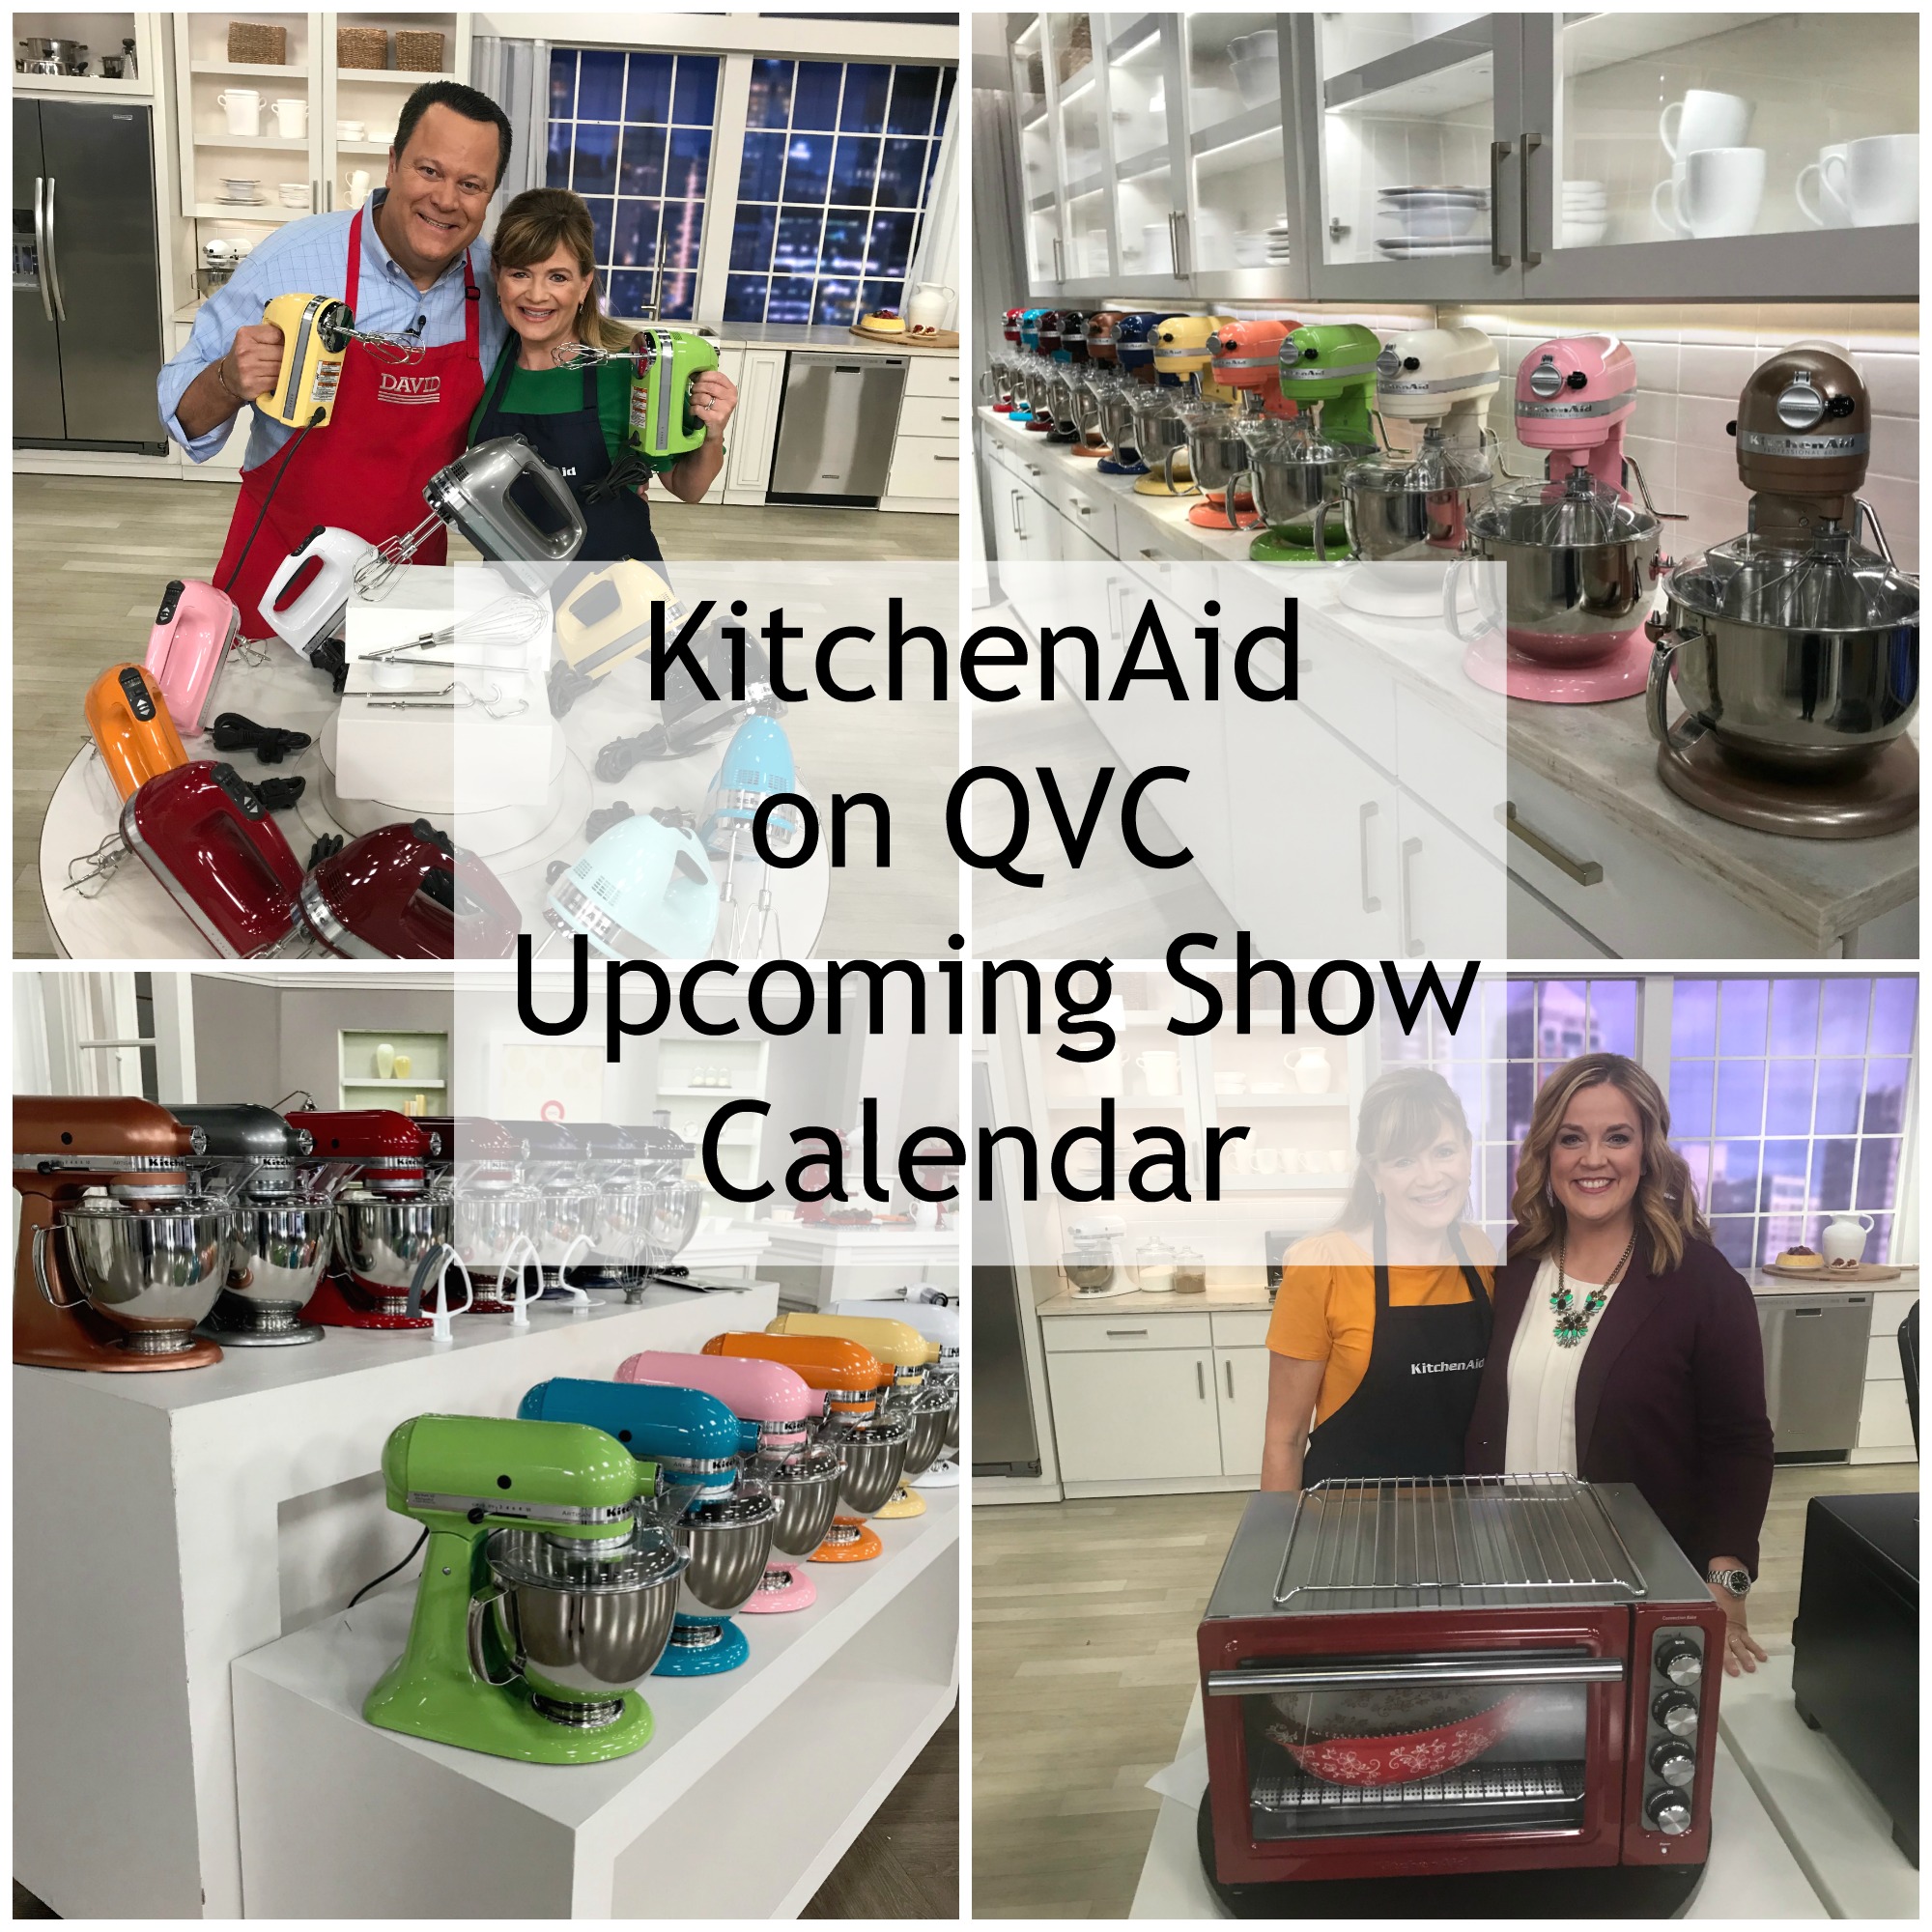 https://www.epicuricloud.com/wp-content/uploads/2019/02/KitchenAid-on-QVC-Calendar-Pic2.jpg